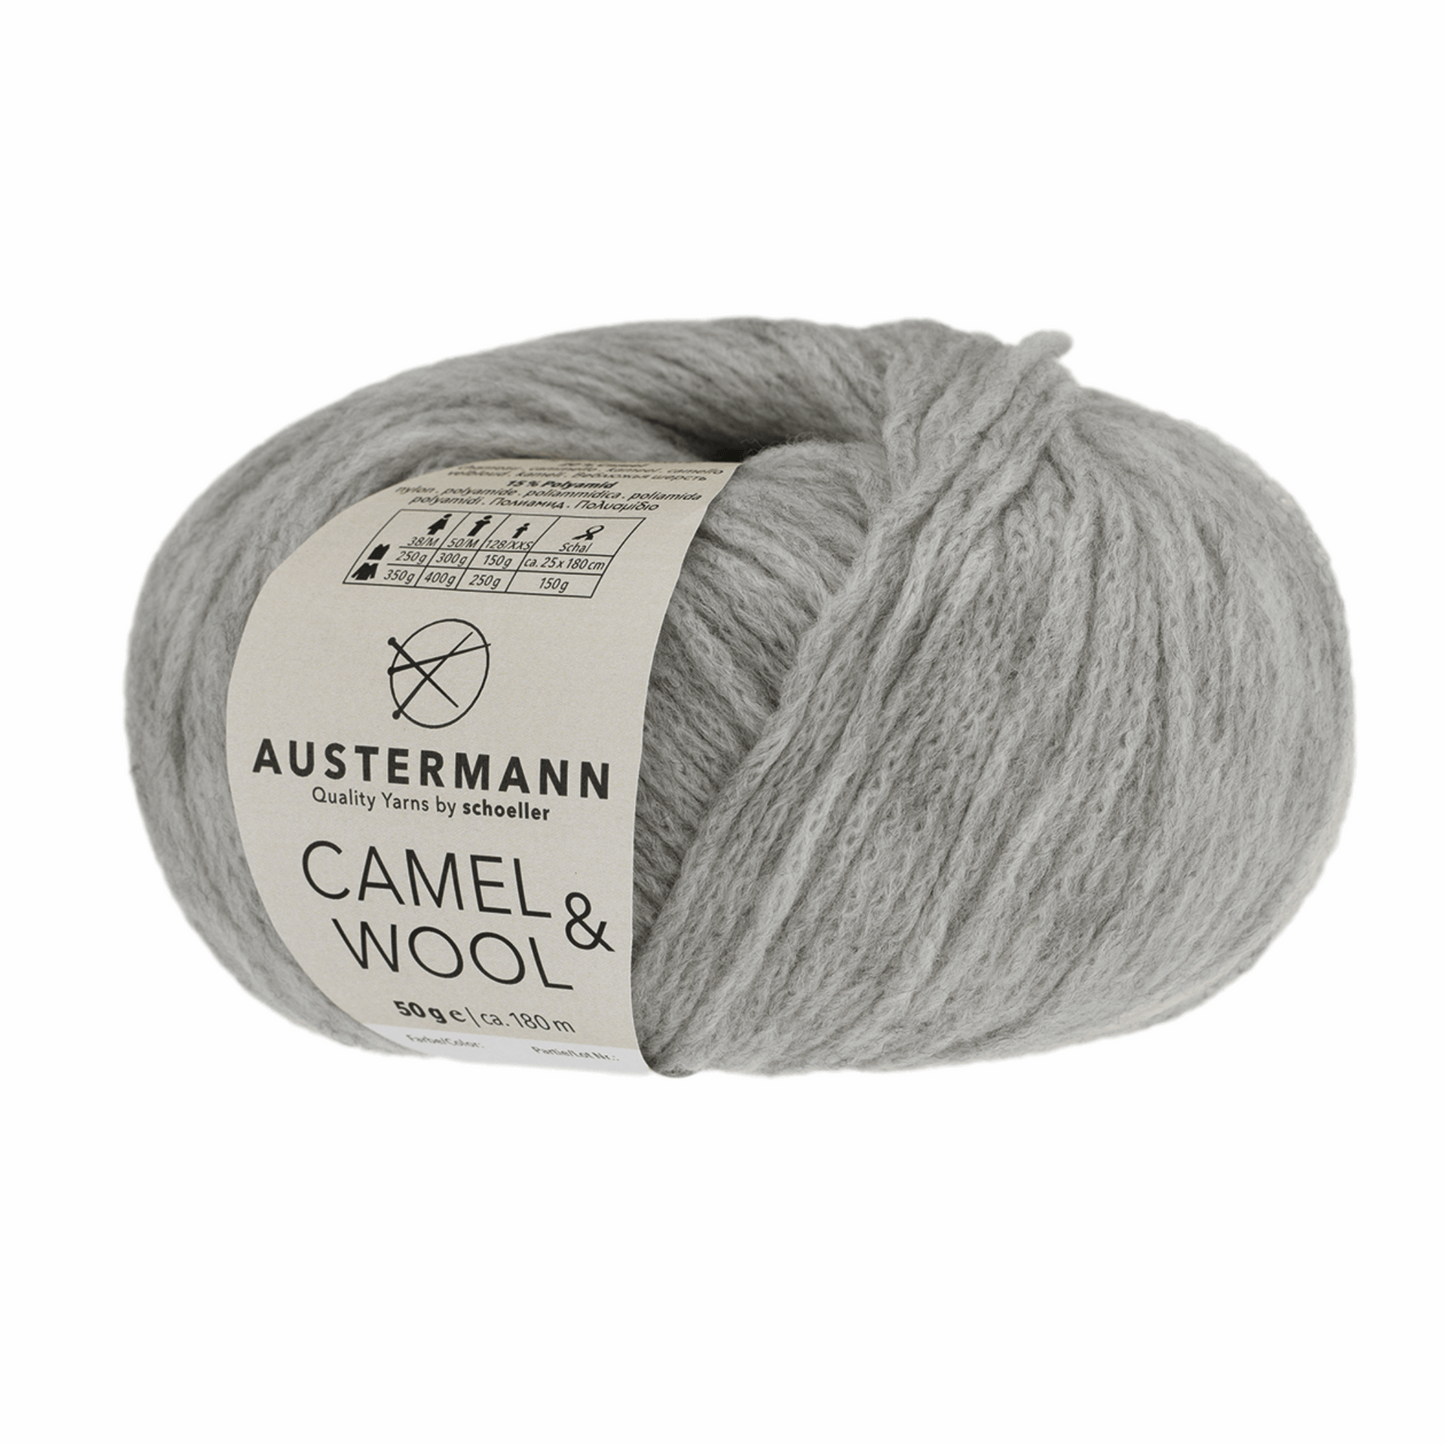 Cameliert& Wool 50g, 90343, Farbe 12, silber